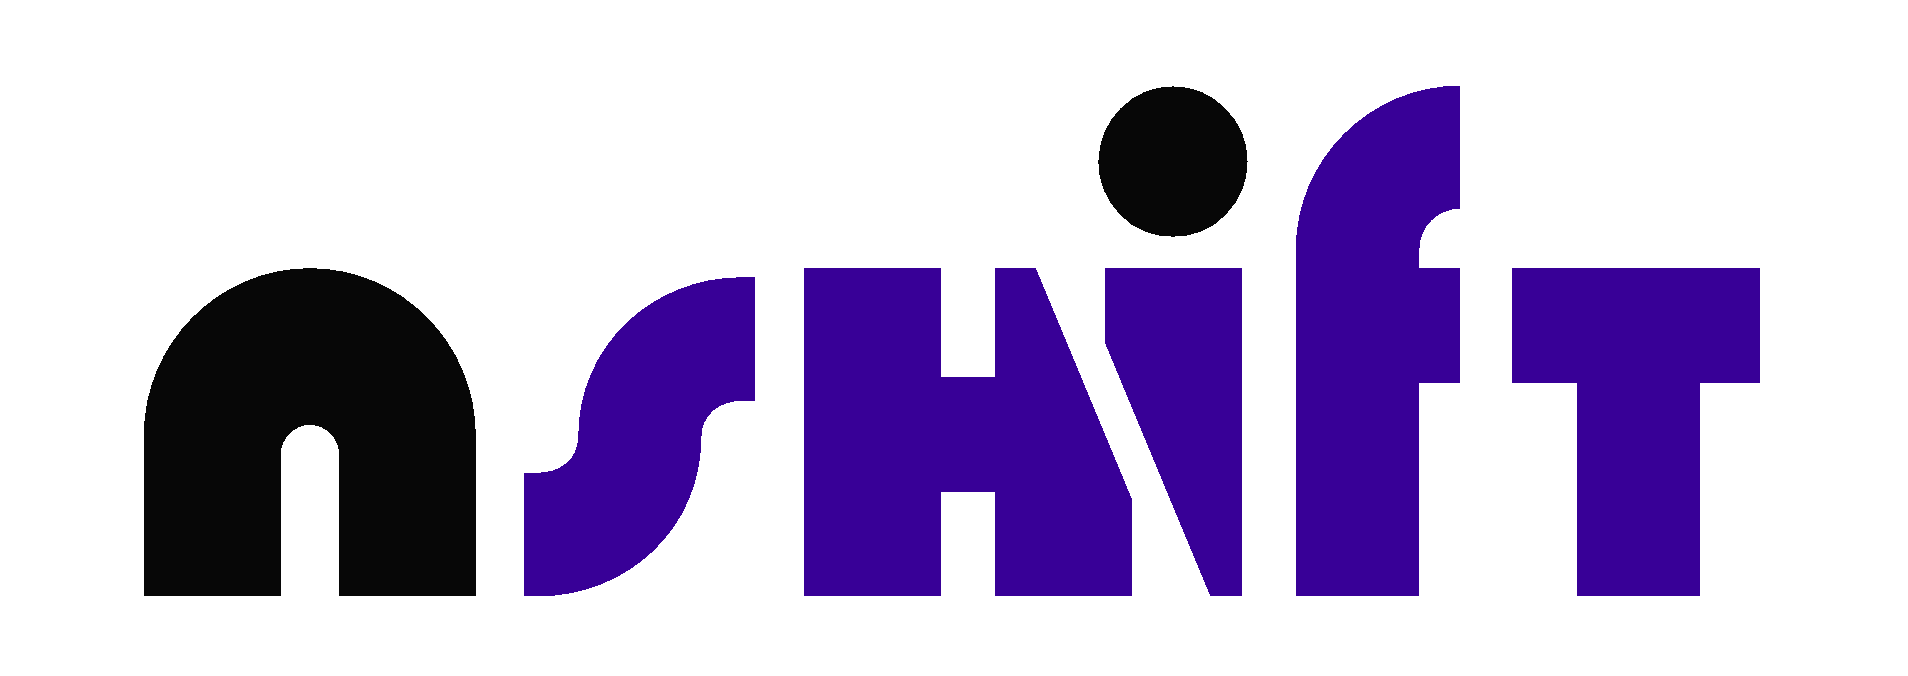 NShift logo.png